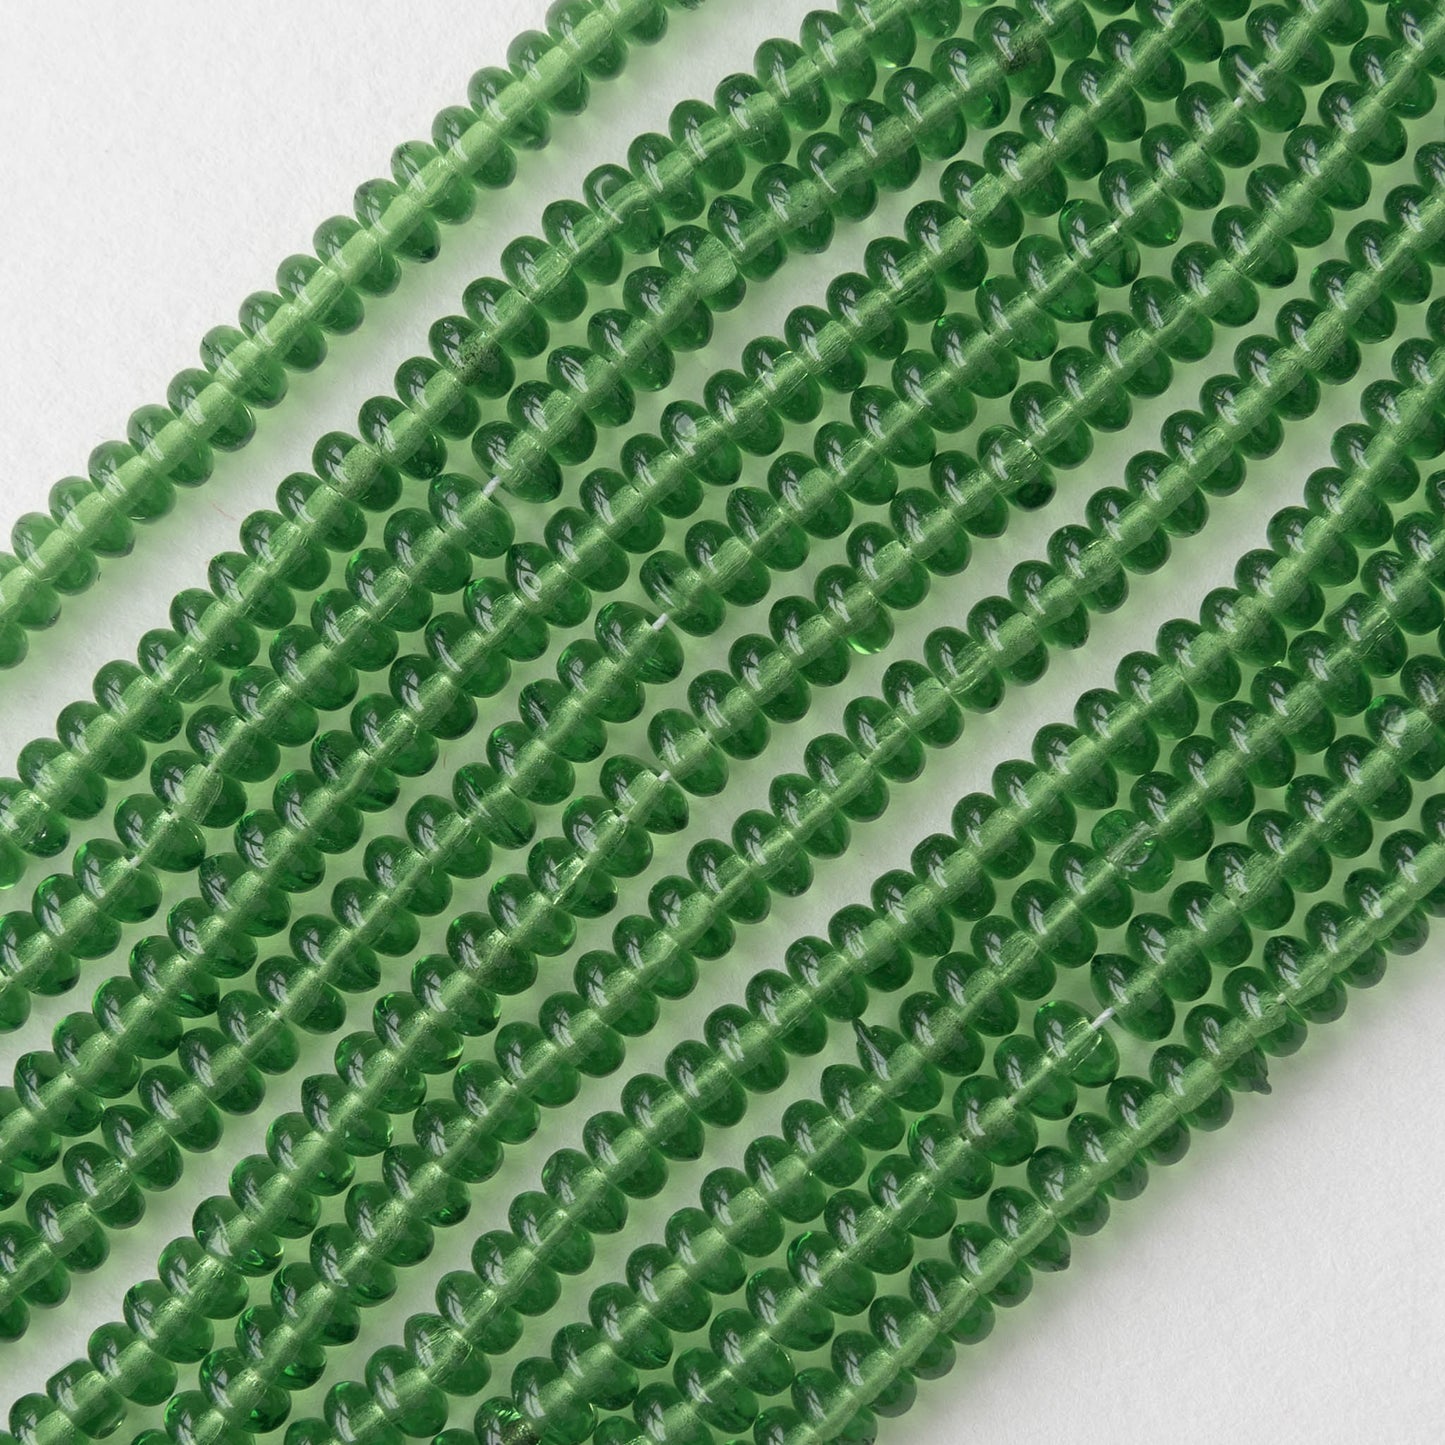 4mm Rondelle Beads - Prairie Green - 100 Beads